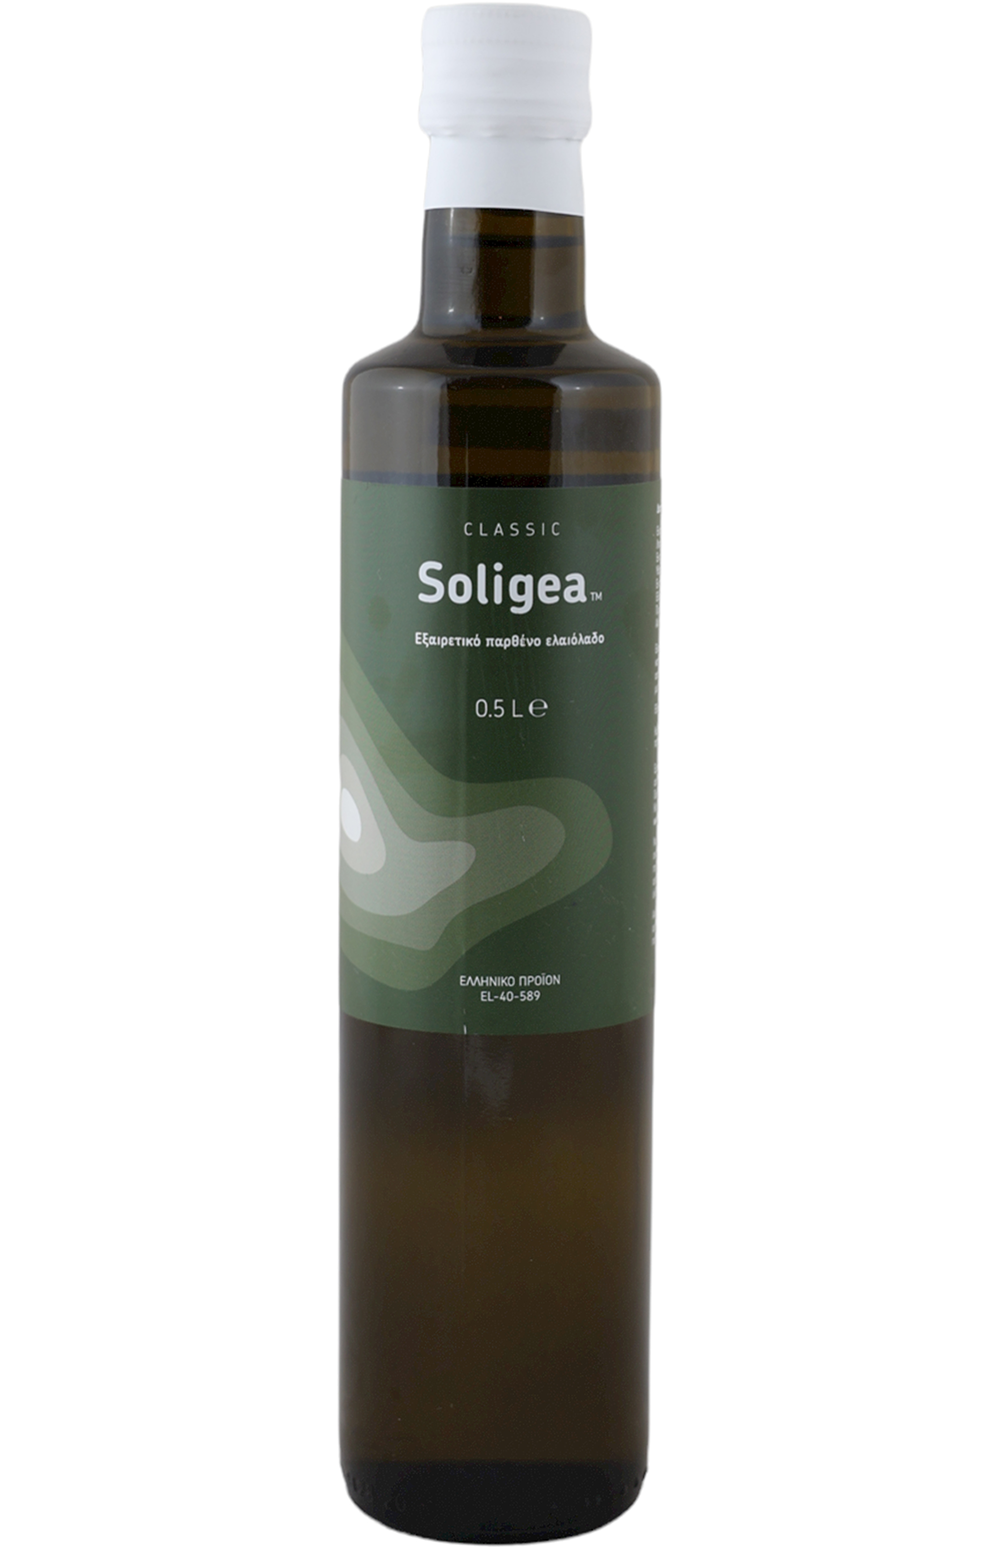 Soligea Classic Olive Oil